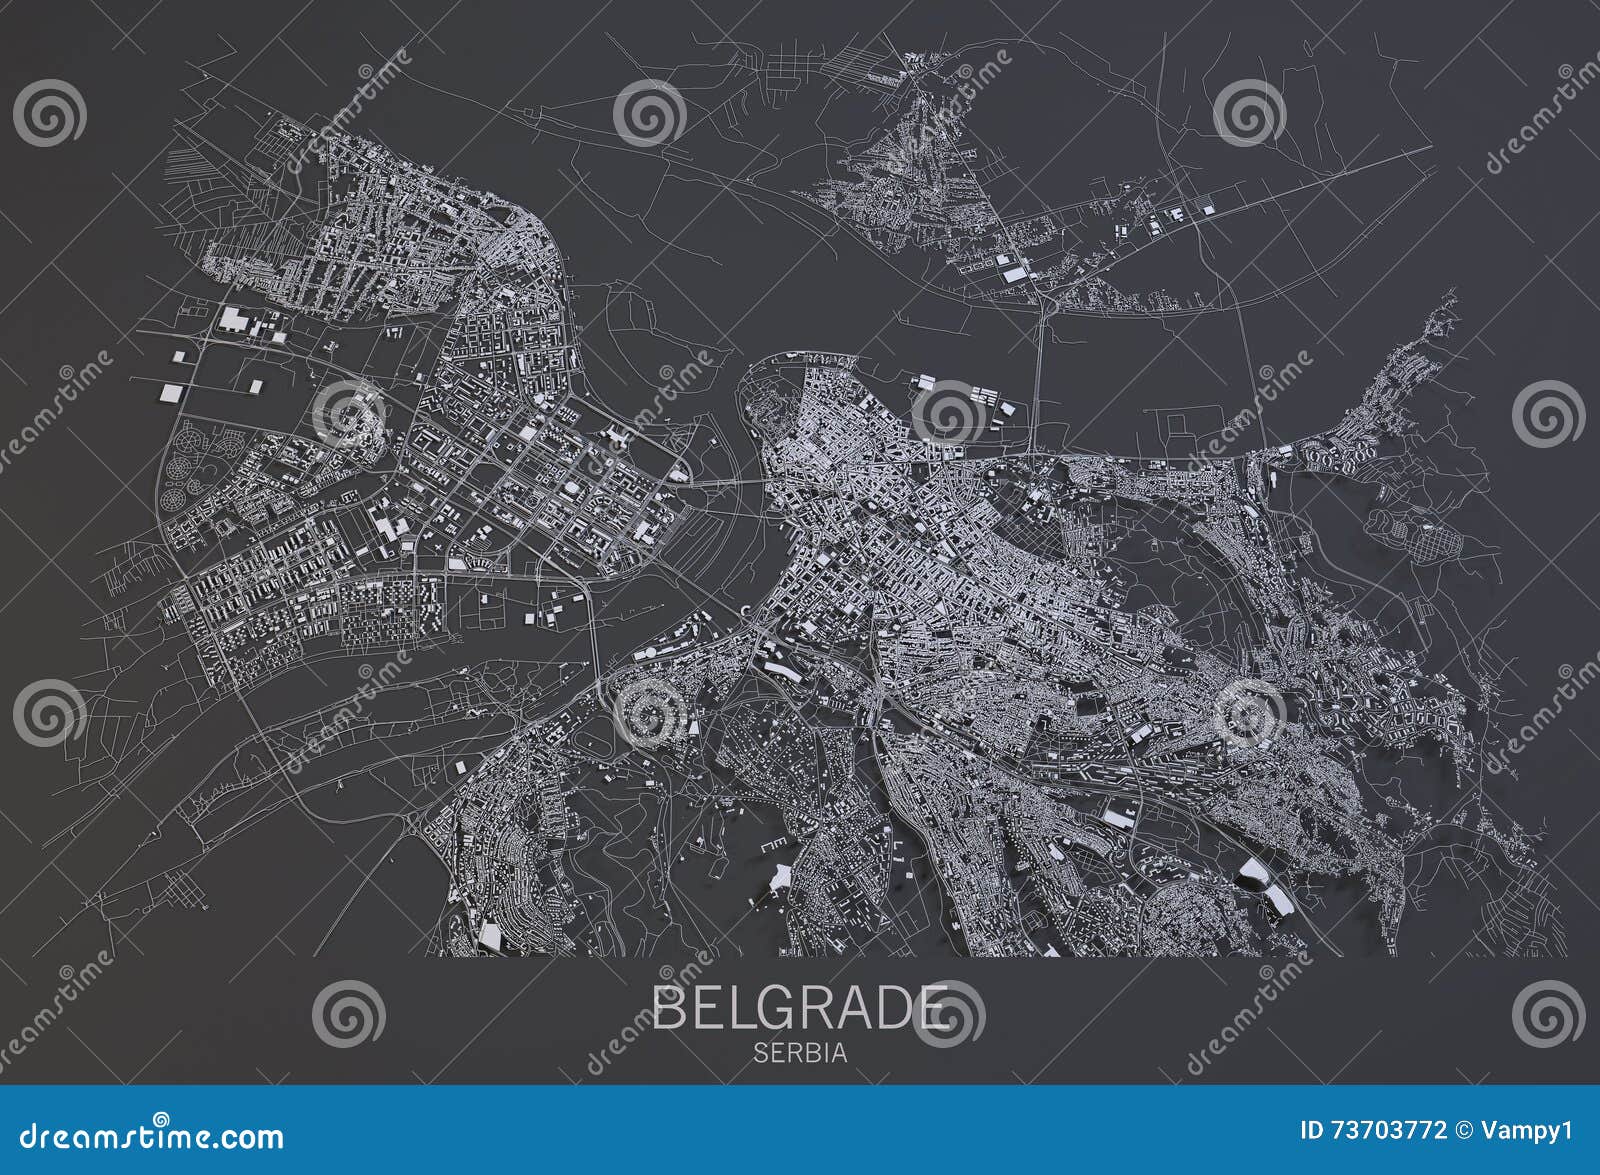 belgrade map, satellite view, serbia